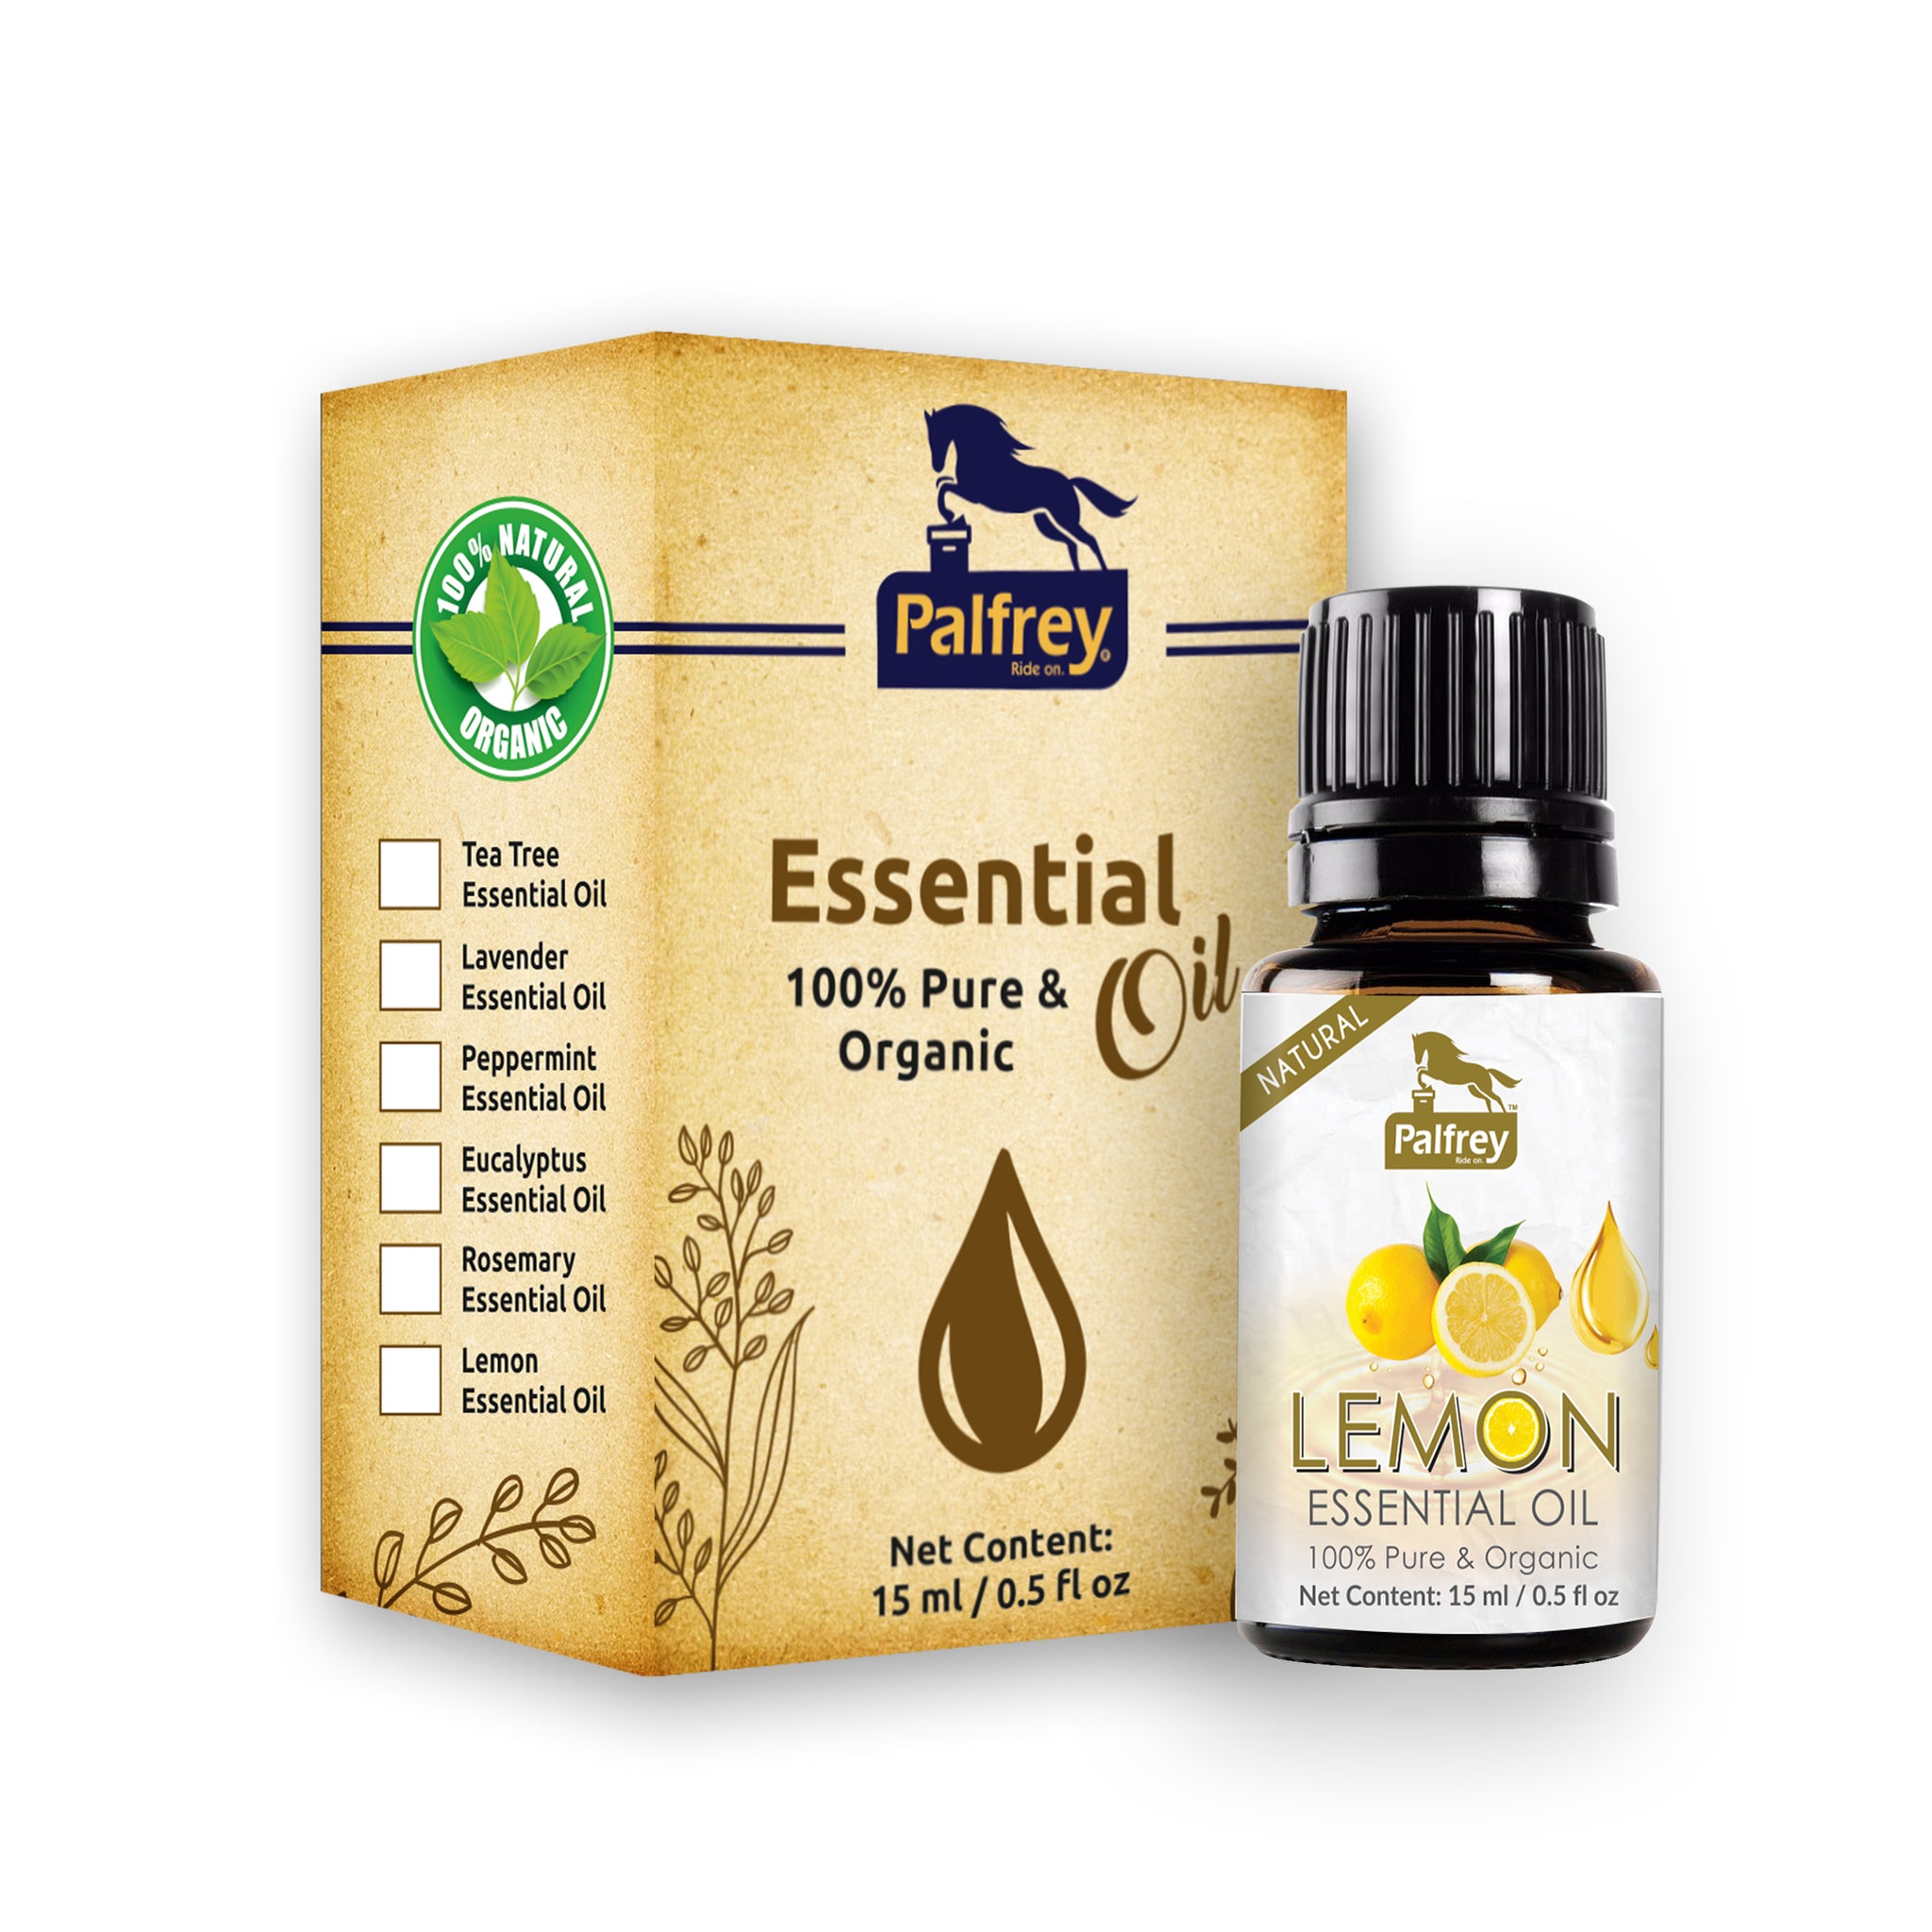 Palfrey Lemon Essential Oil 15ml